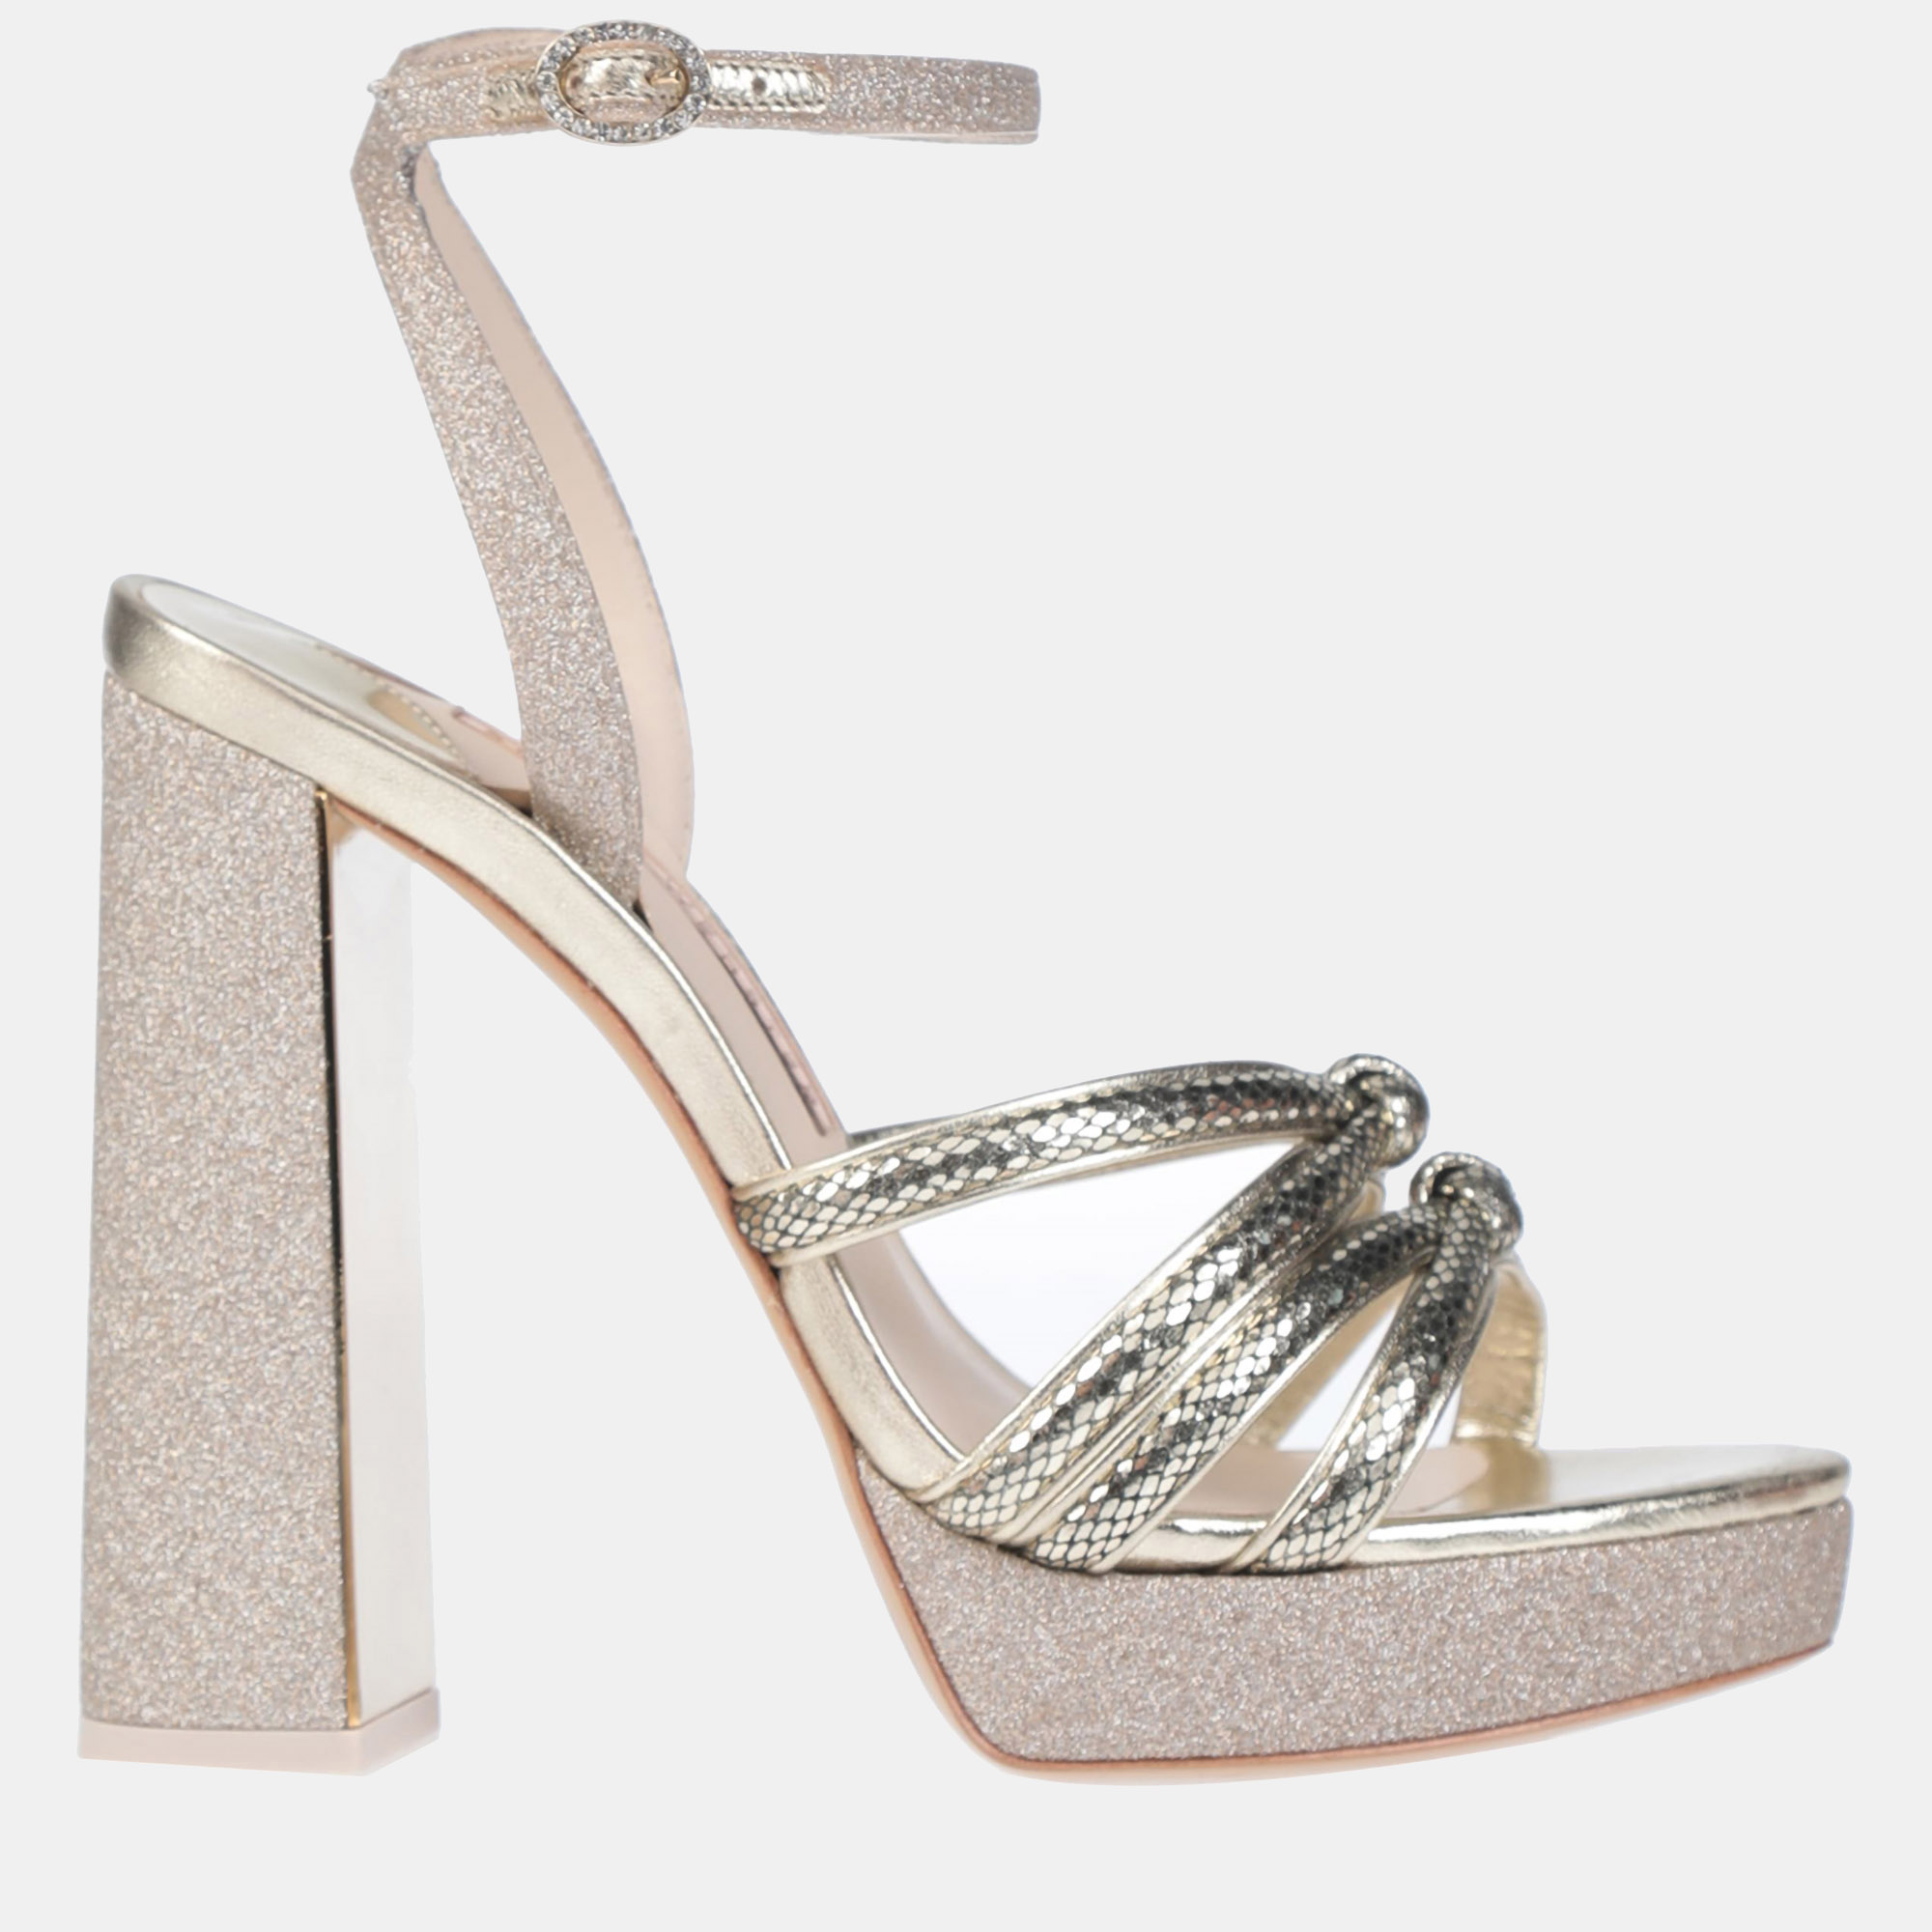 Sophia webster metallic glitter and suede sandals 40